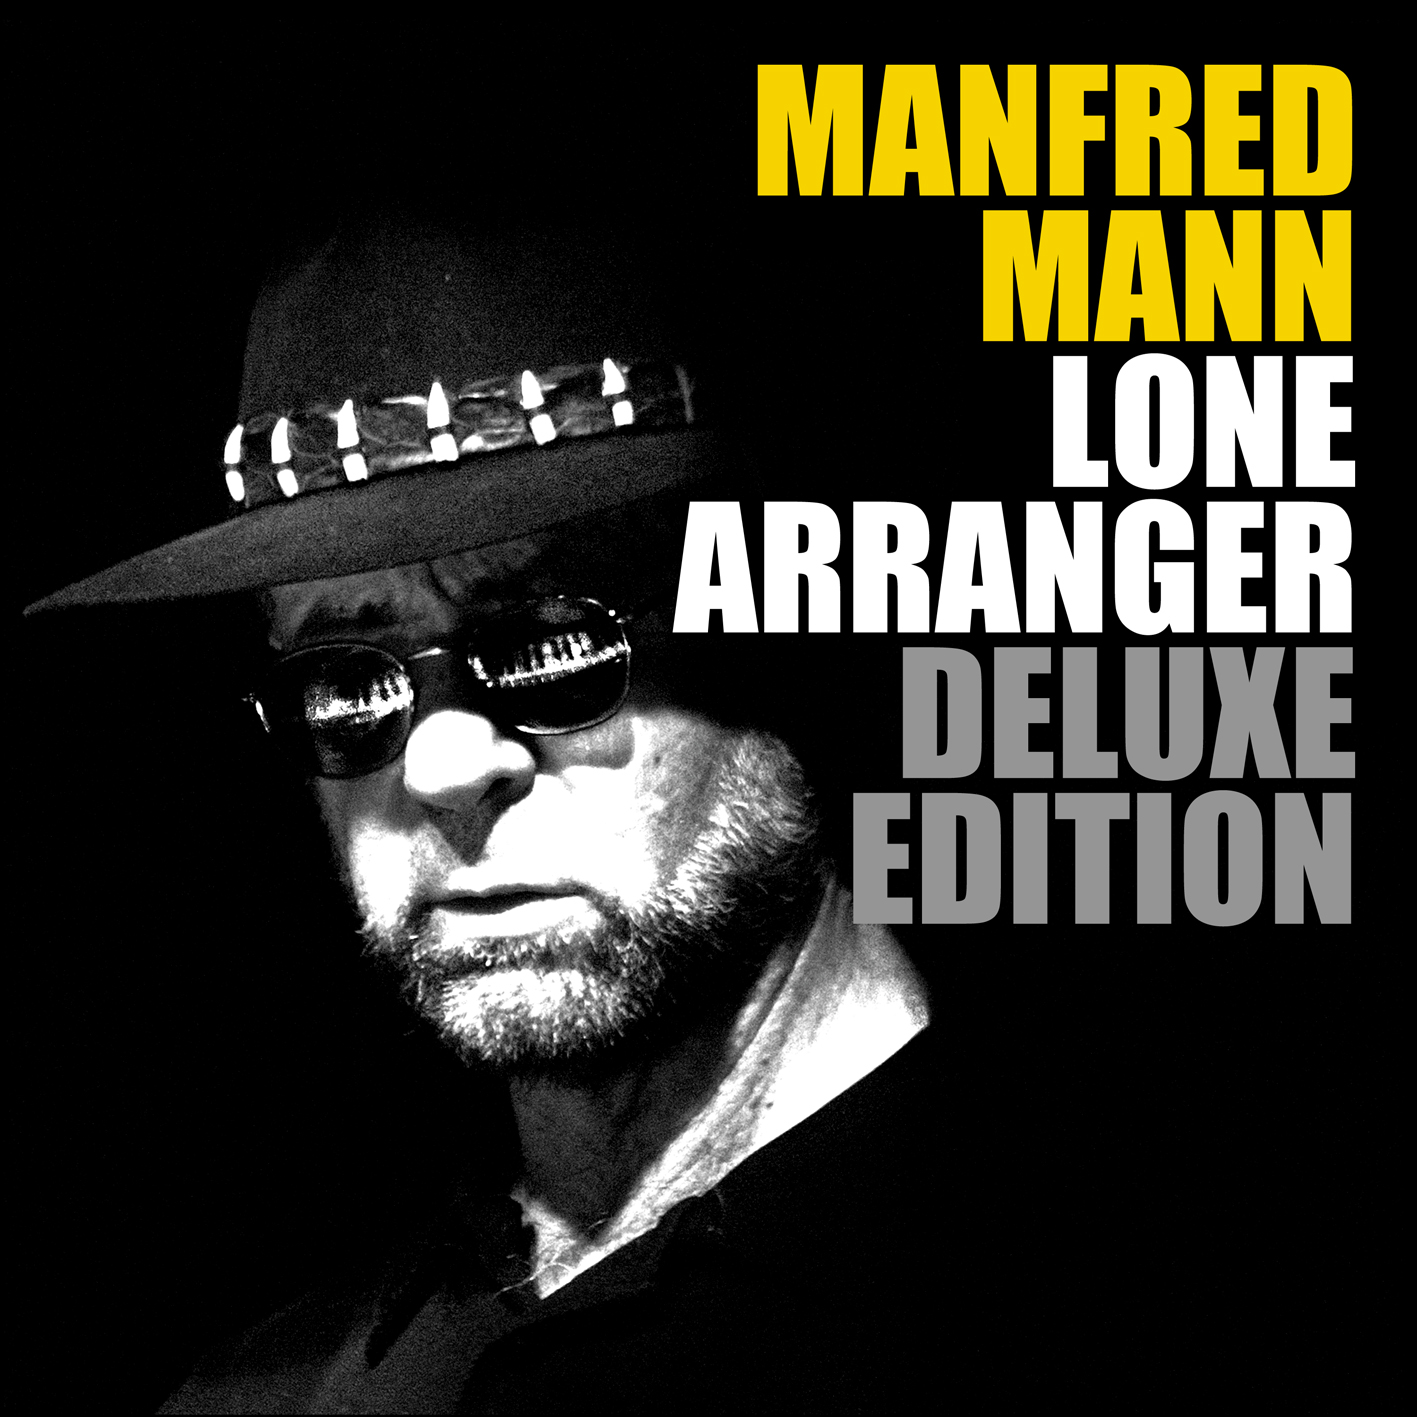 Lone Arranger (Deluxe Edition)